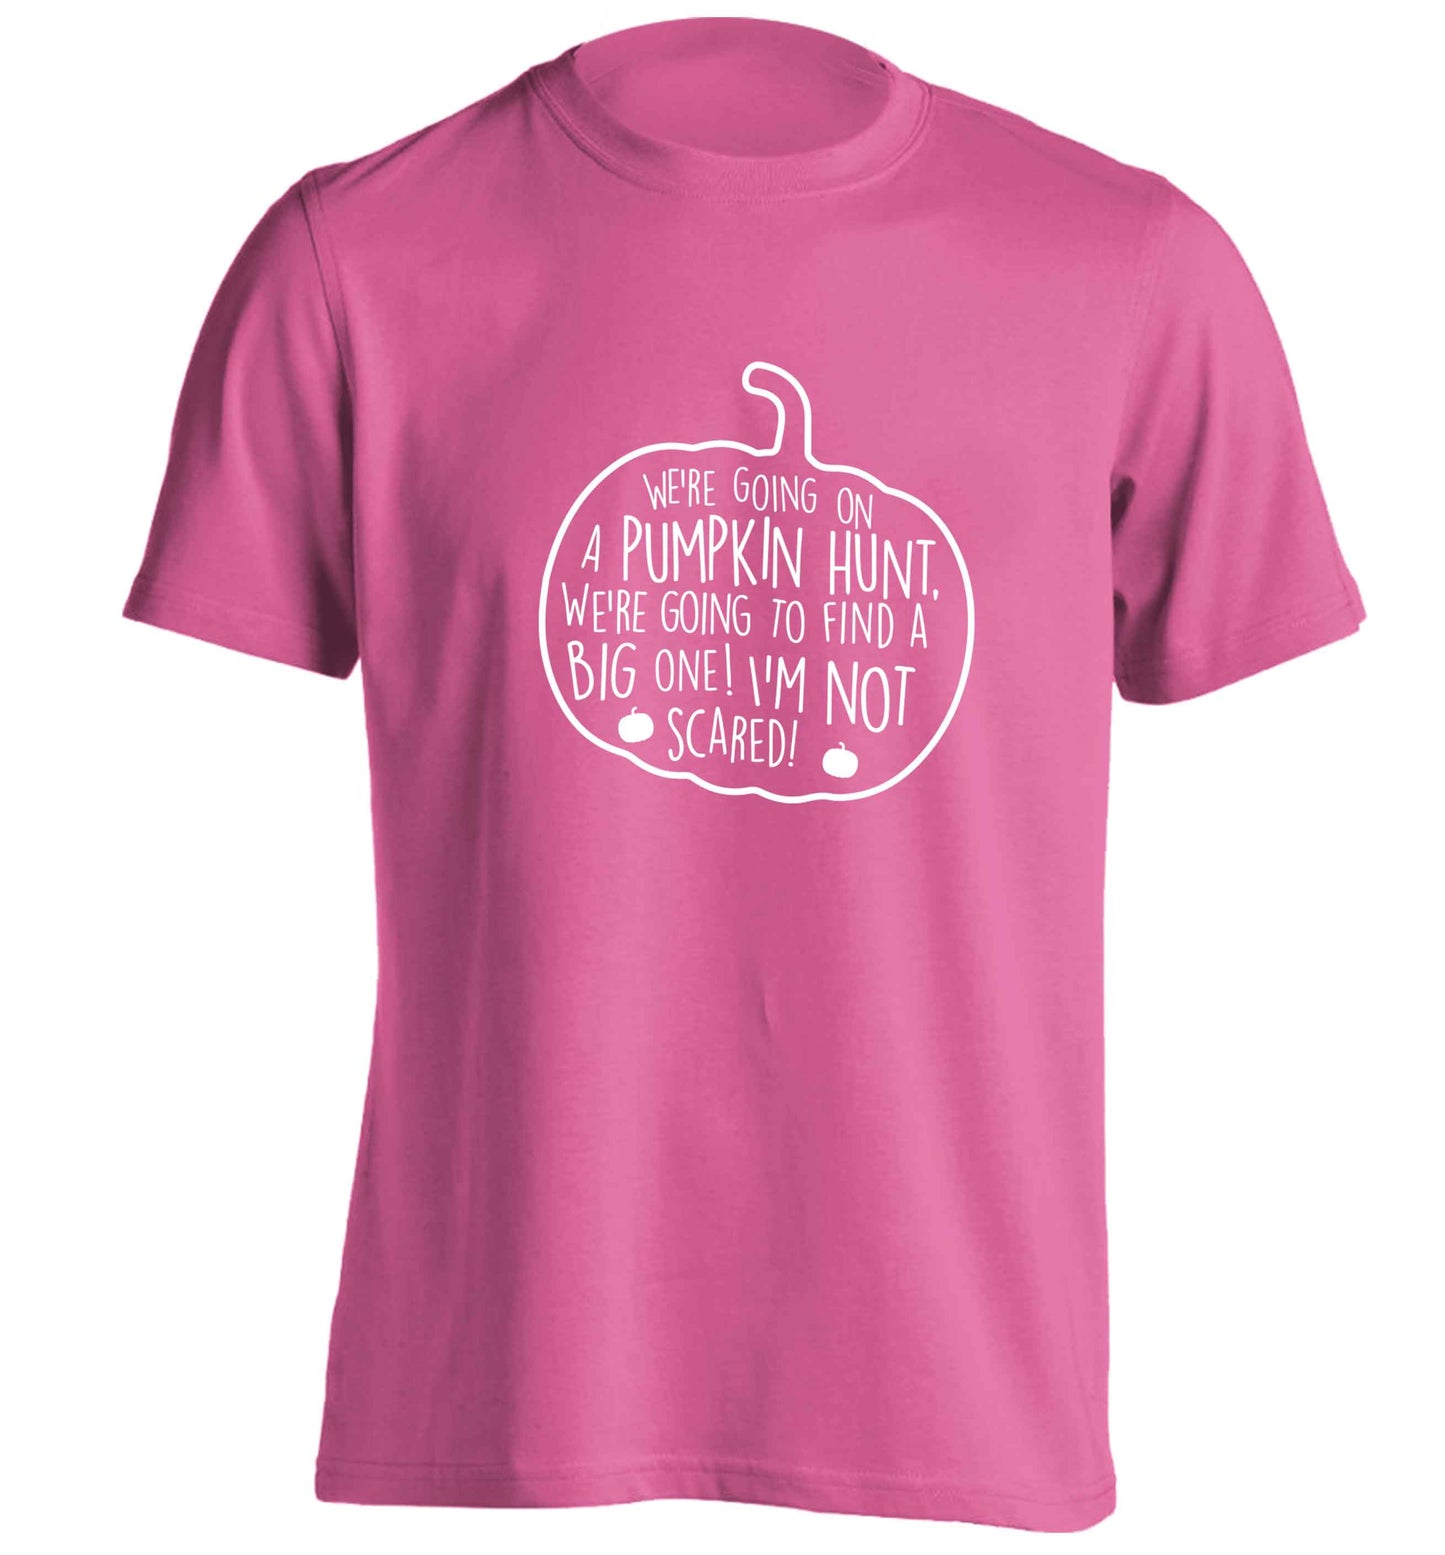 We're going on a pumpkin hunt adults unisex pink Tshirt 2XL